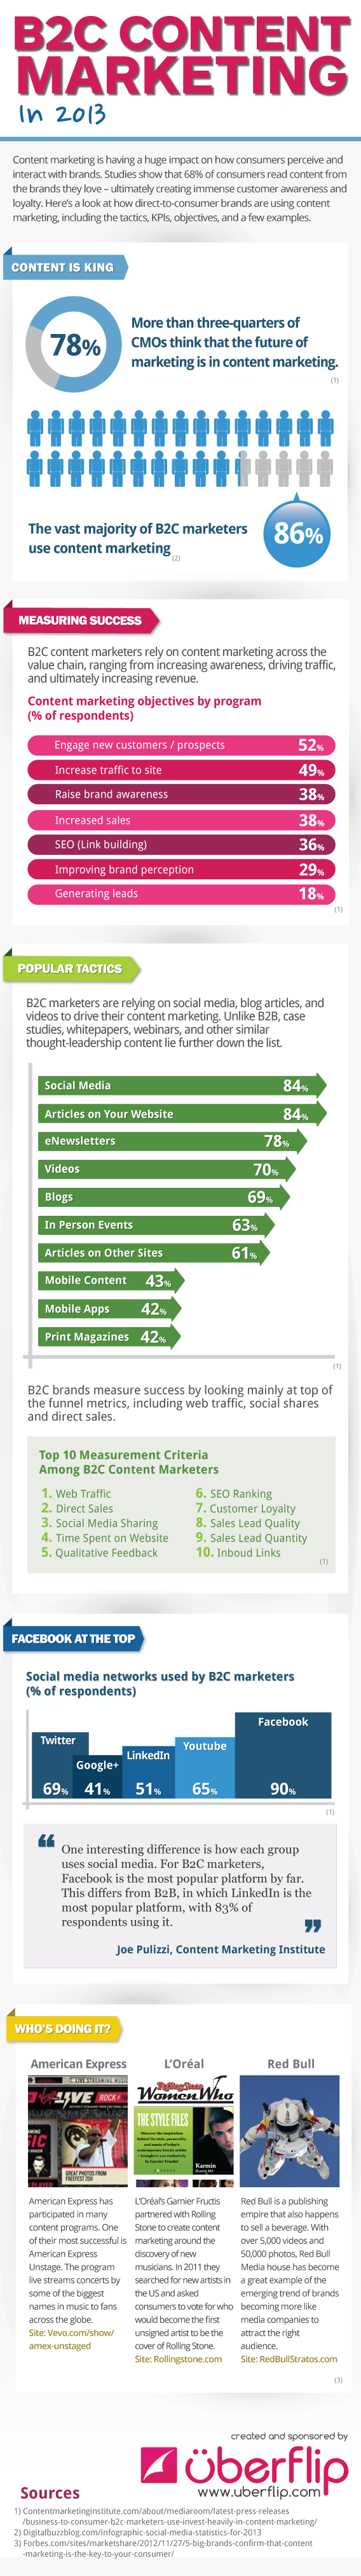 b2c content marketing 2013 infographic